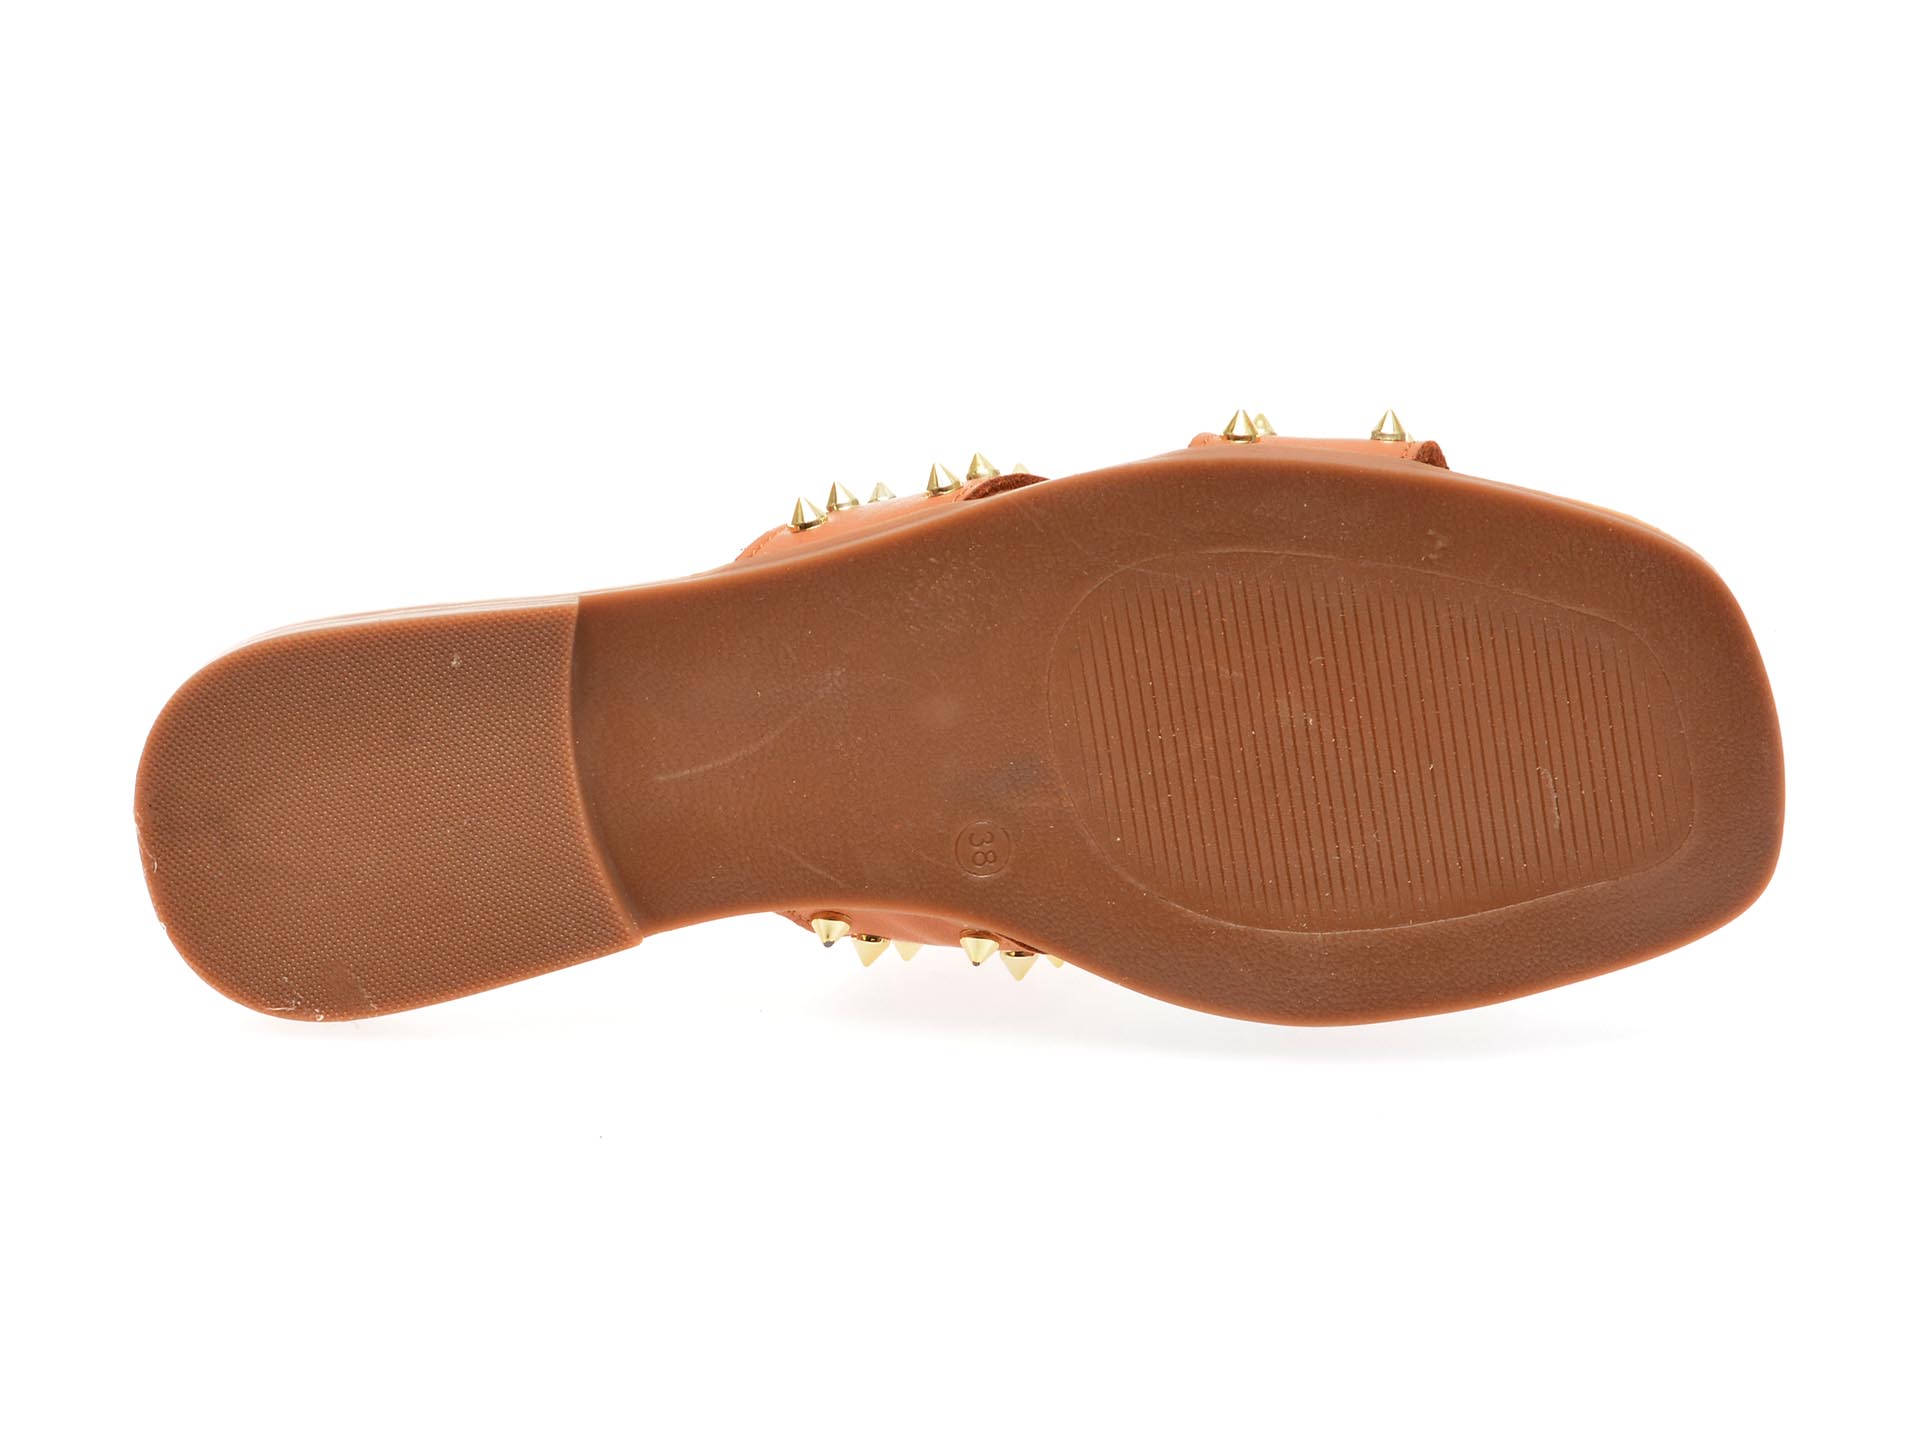 Papuci casual GRYXX maro, 231360, din piele naturala